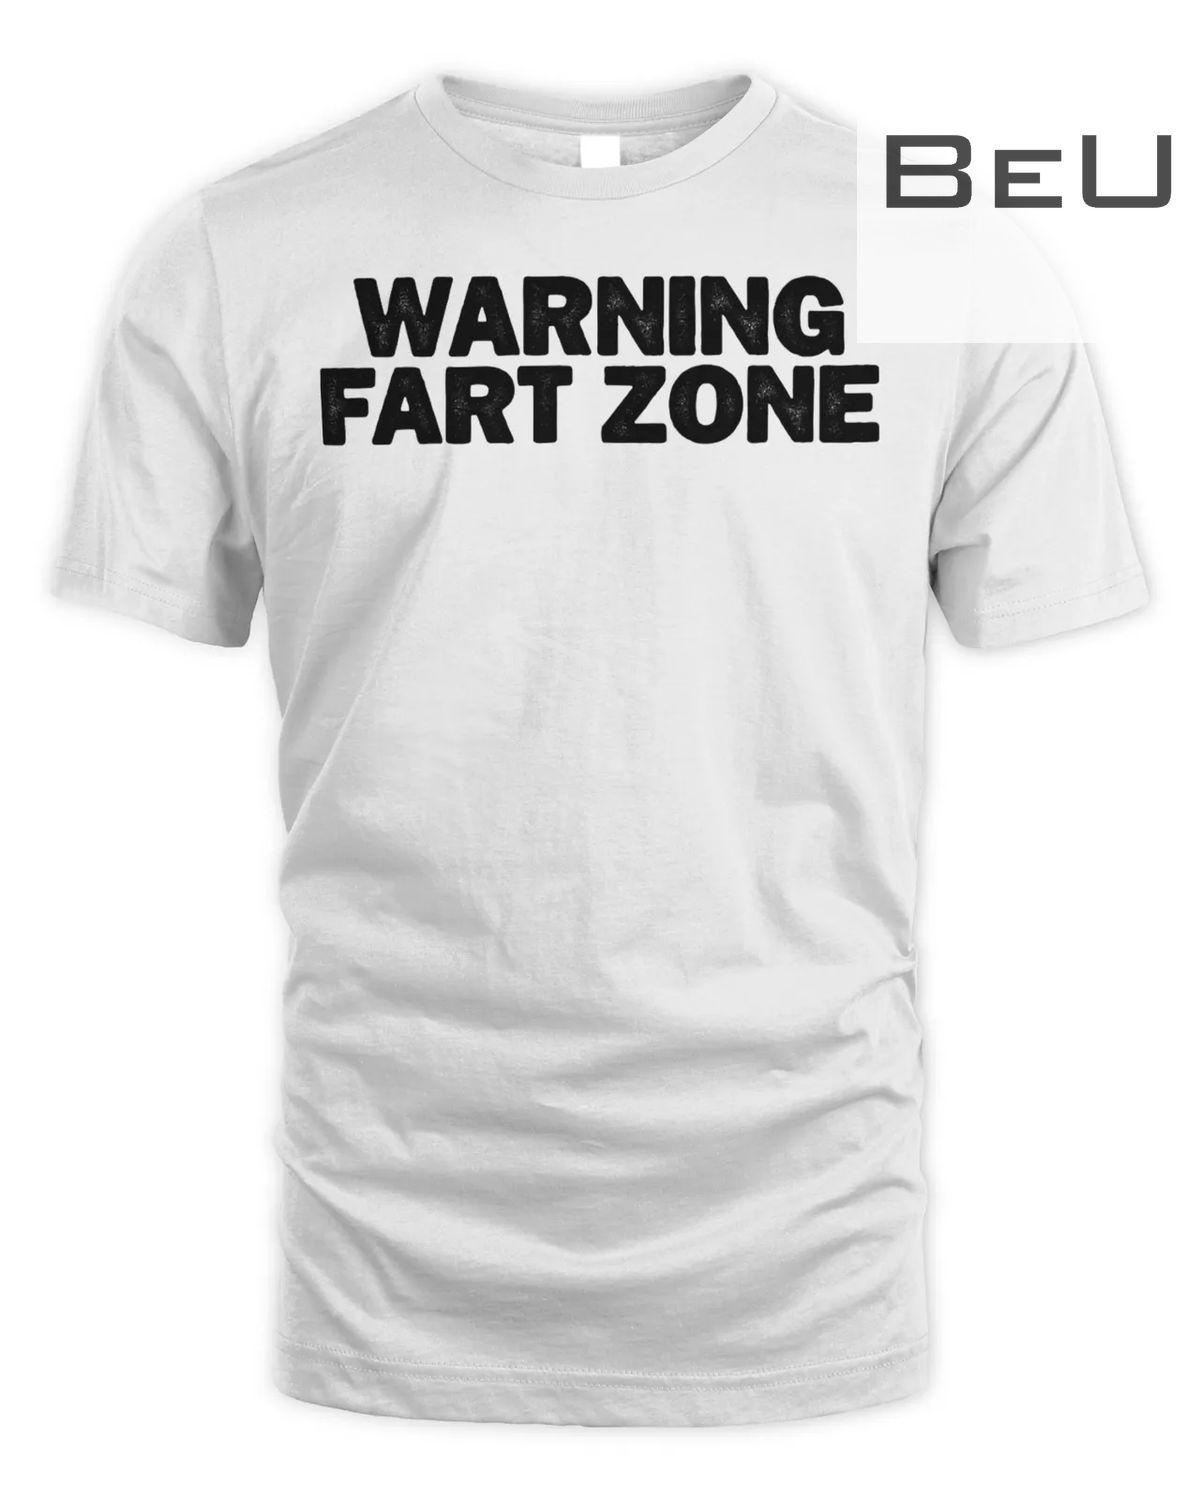 Best Friend Funny Warning Fart Zone Saying Sarcasm Joke T-shirt